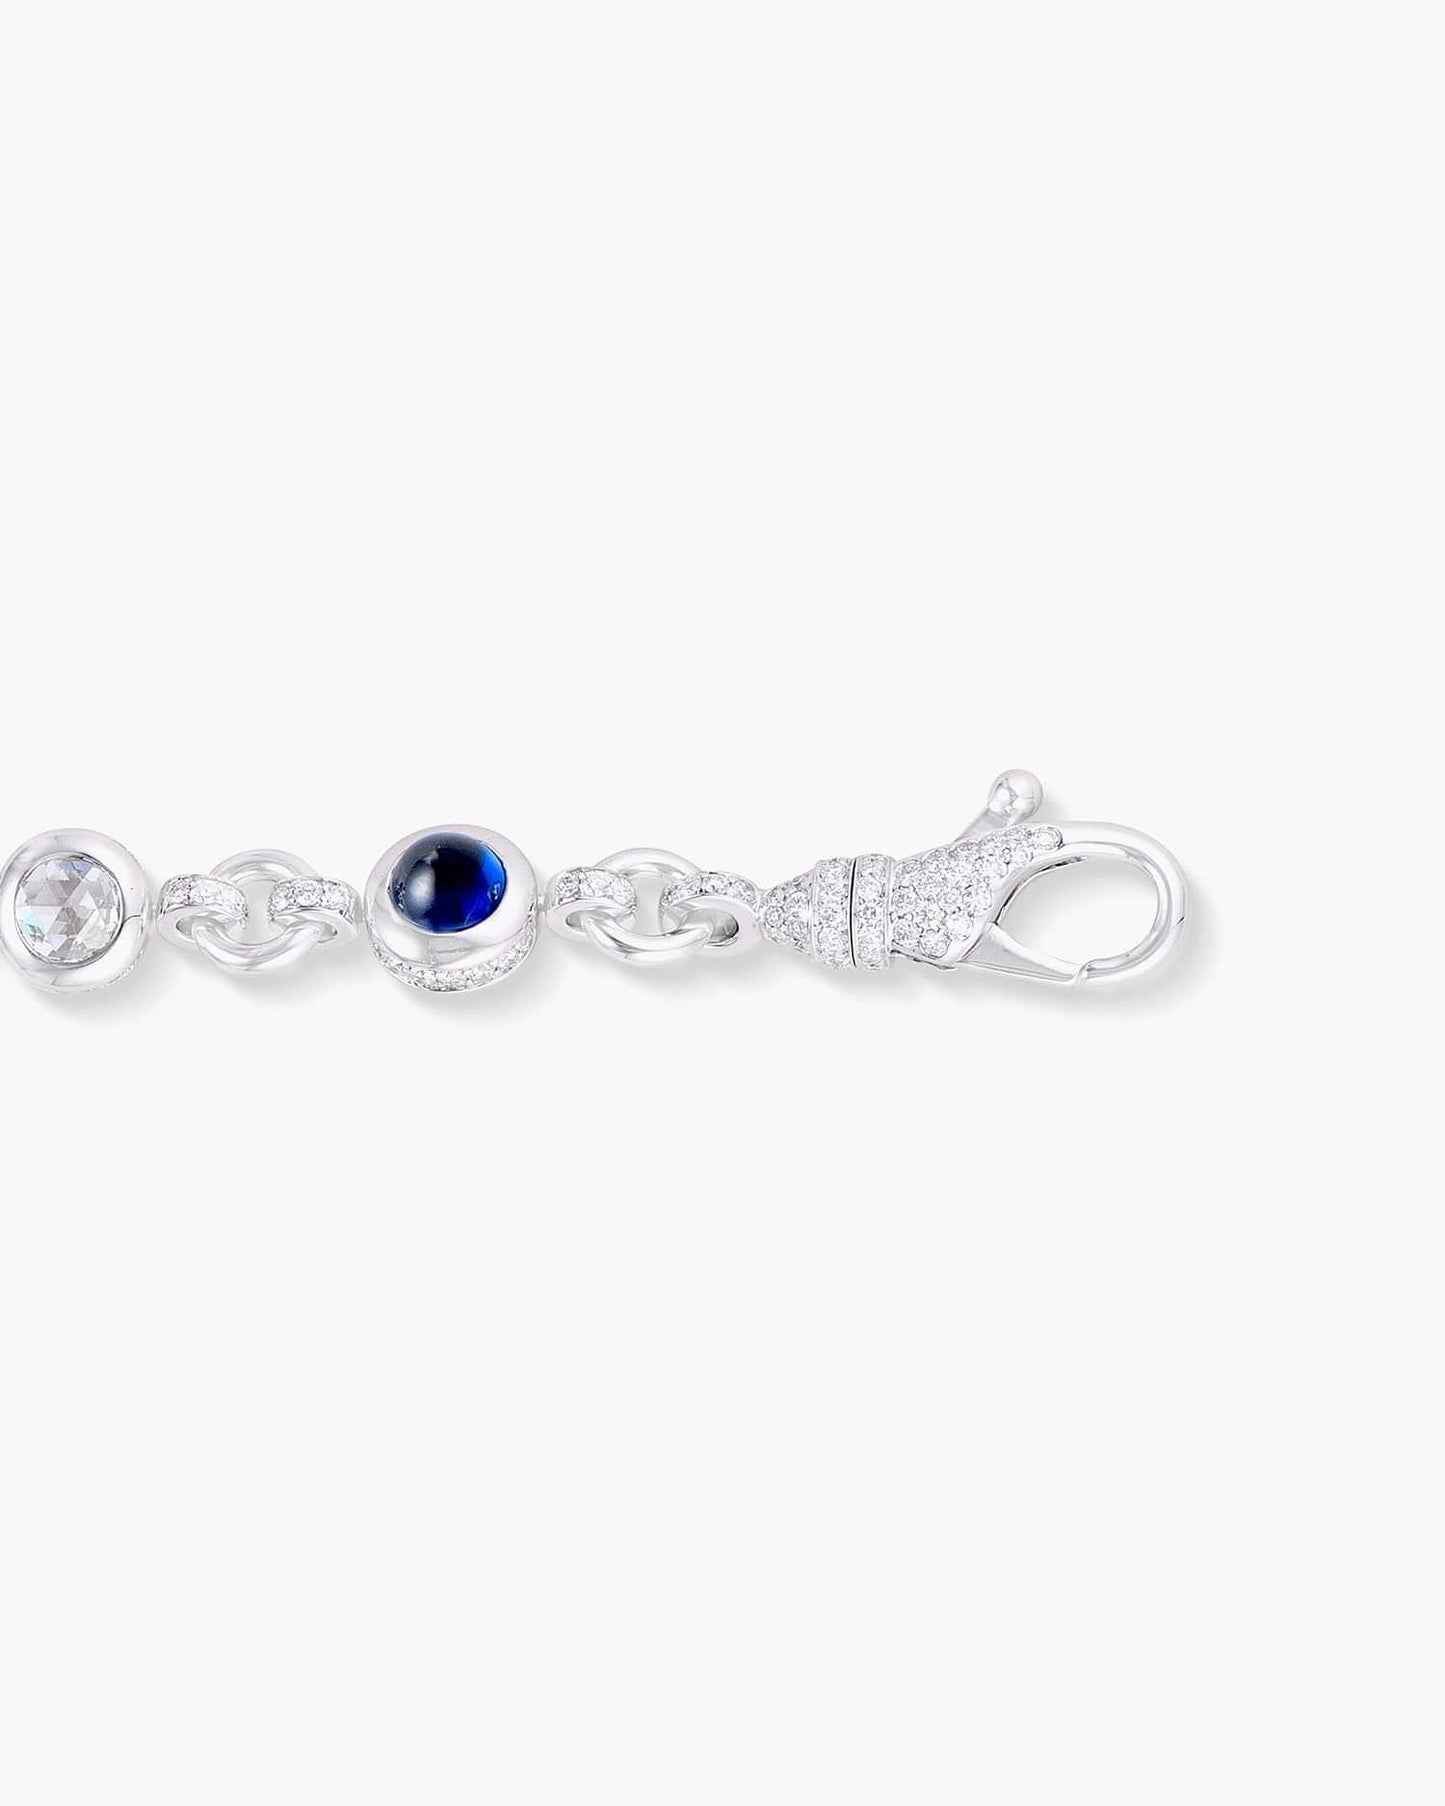 Cabochon Sapphire and Diamond Bracelet